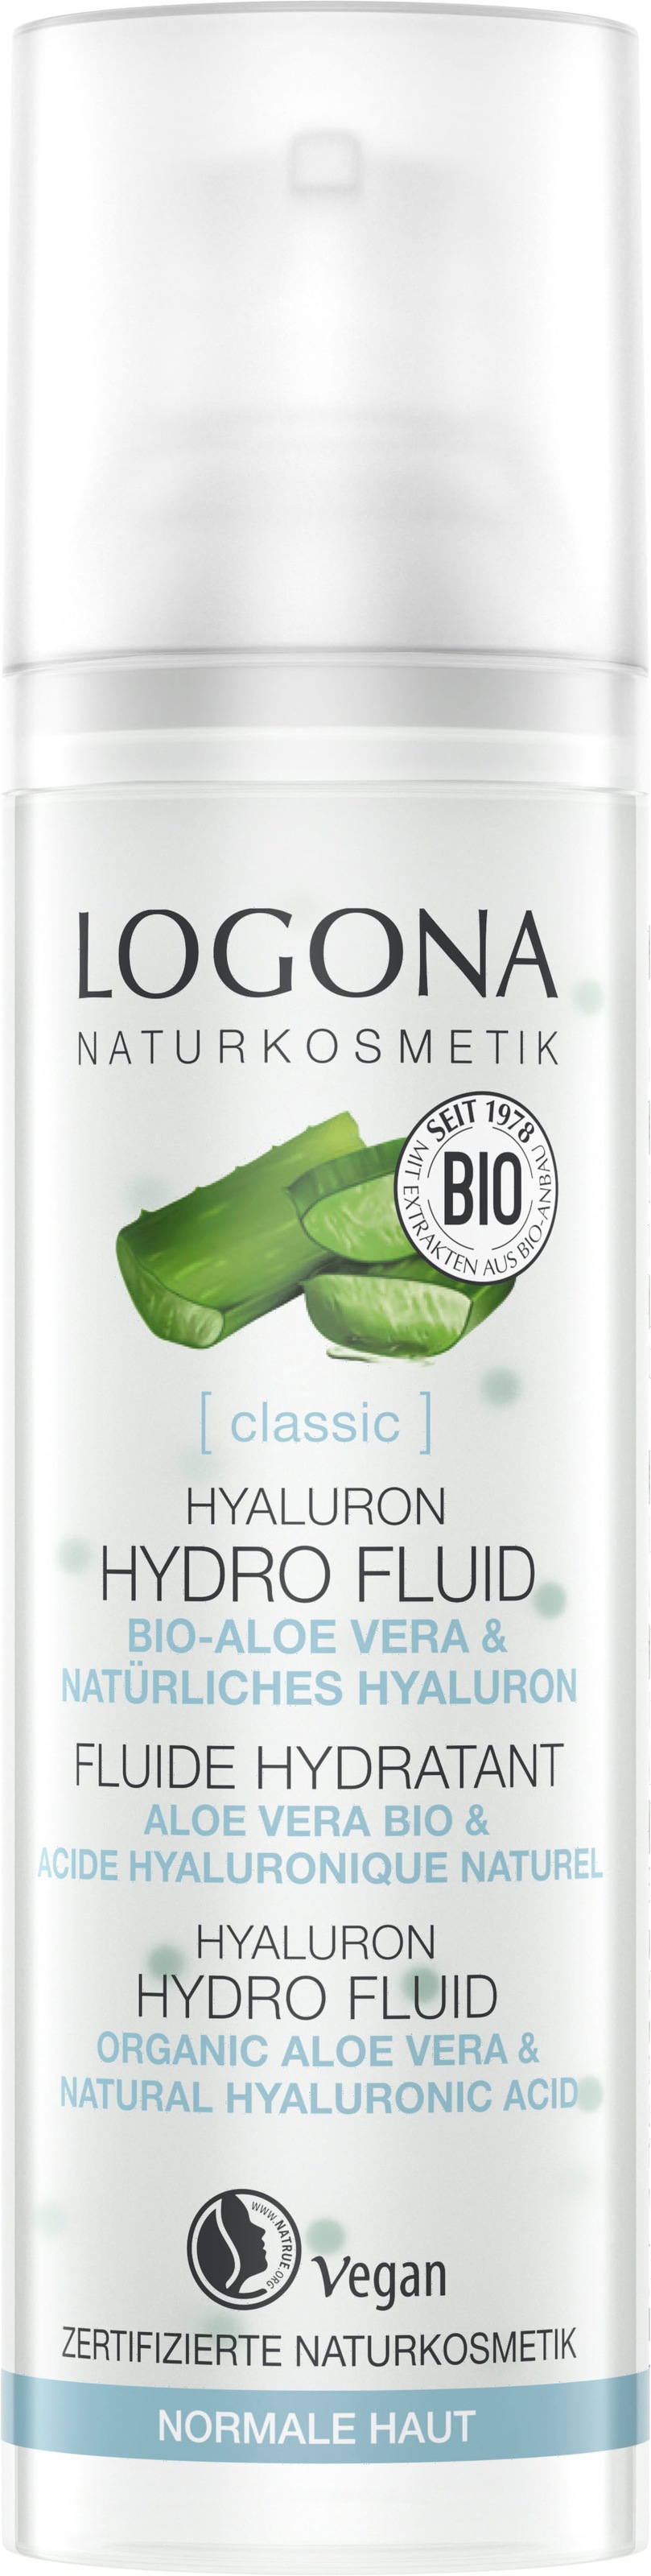 LOGONA Gesichtsfluid »Logona classic Hyaluron | Hydro BAUR kaufen Fluid« online